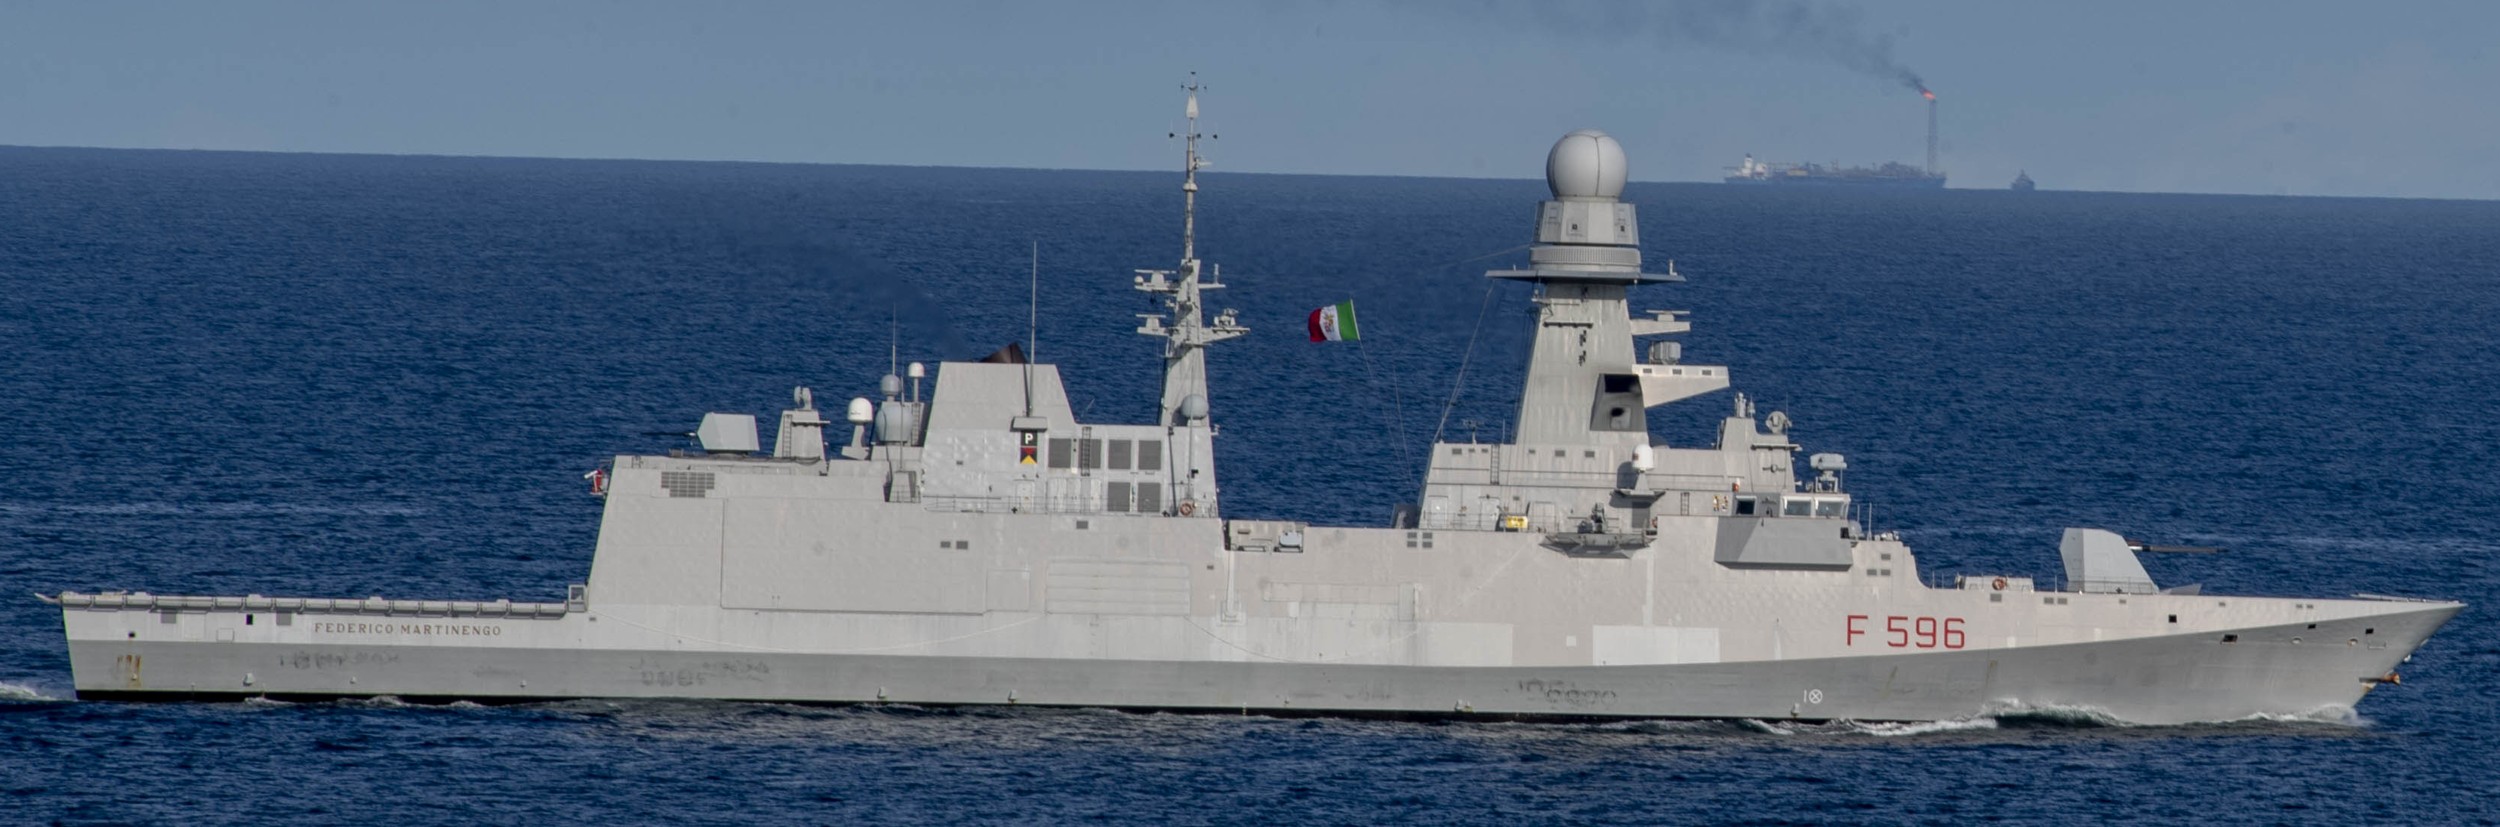 f-596 federico martinengo its nave bergamini fremm class guided missile frigate italian navy marina militare 22